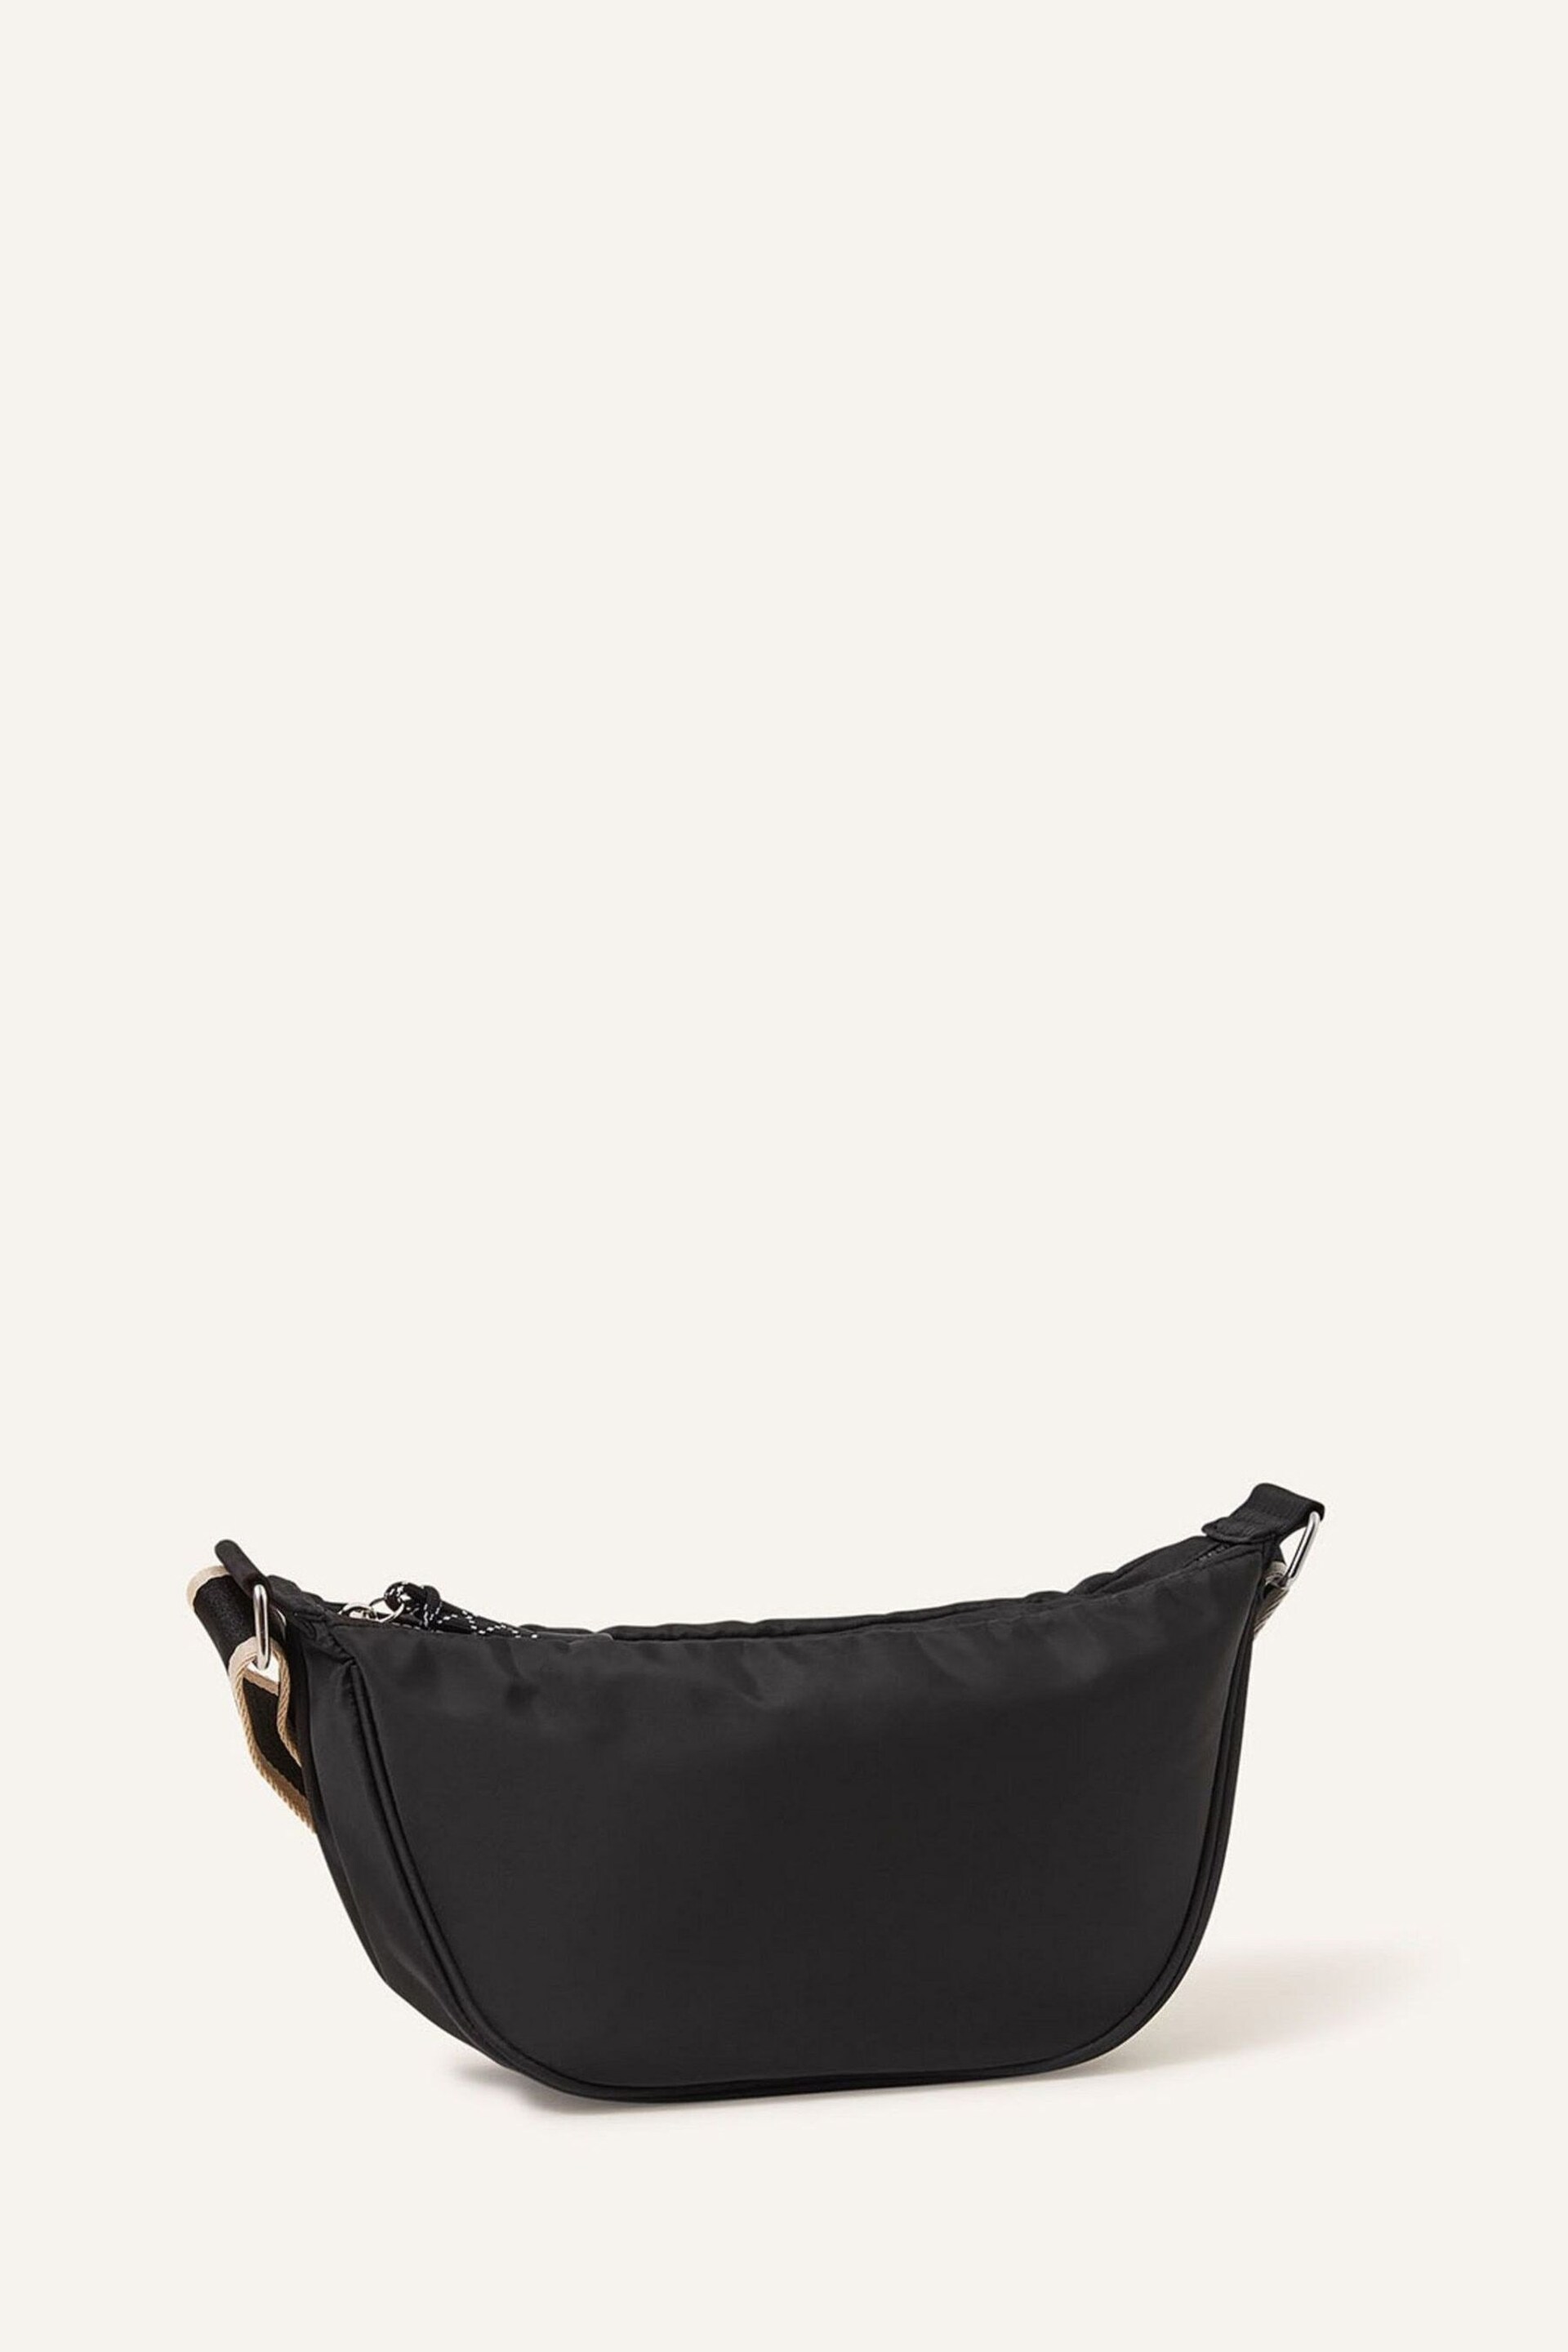 Accessorize Black Sling Cross-Body Bag - Image 2 of 2